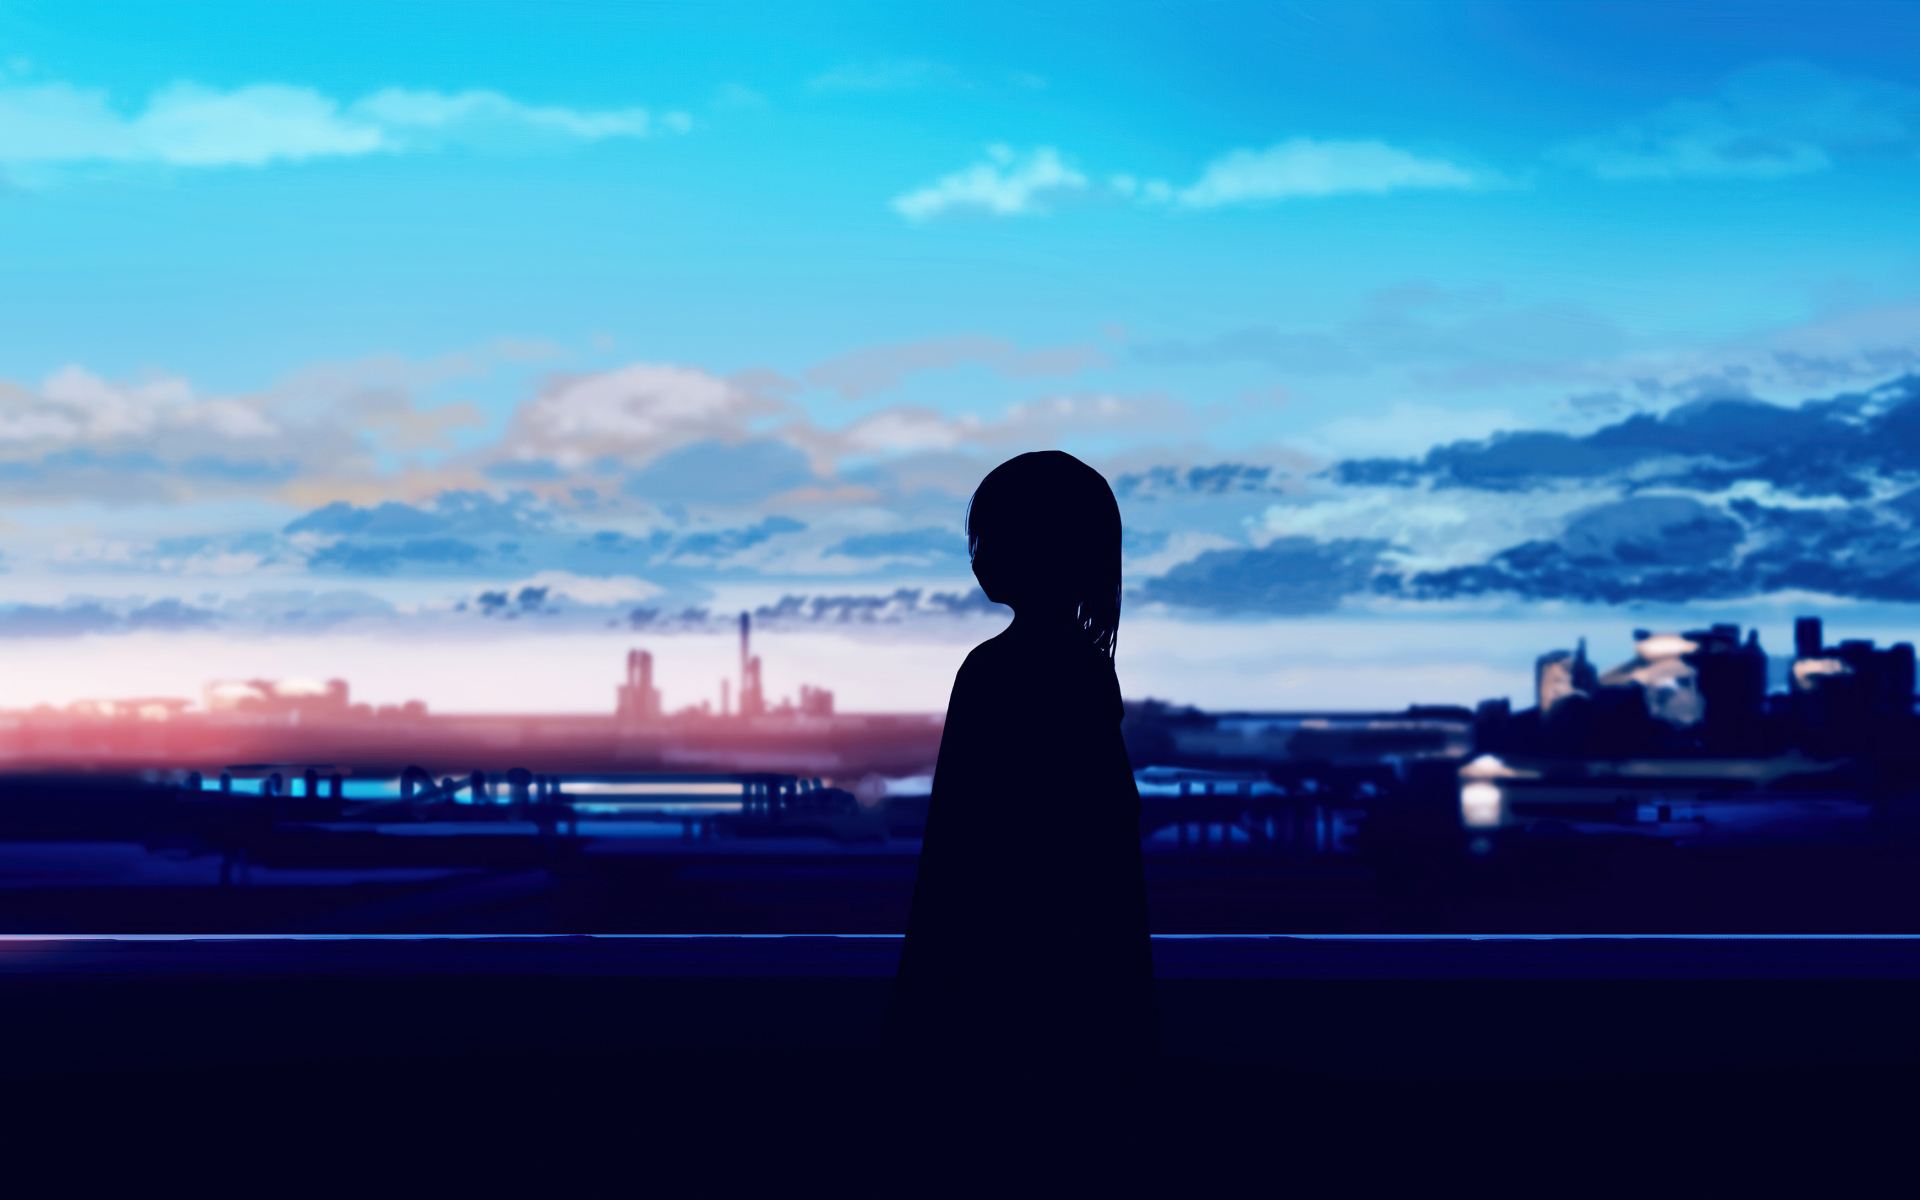 Download wallpaper 1920x1200 anime girl, silhouette, pretty sunset, art,  16:10 widescreen 1920x1200 hd background, 28222